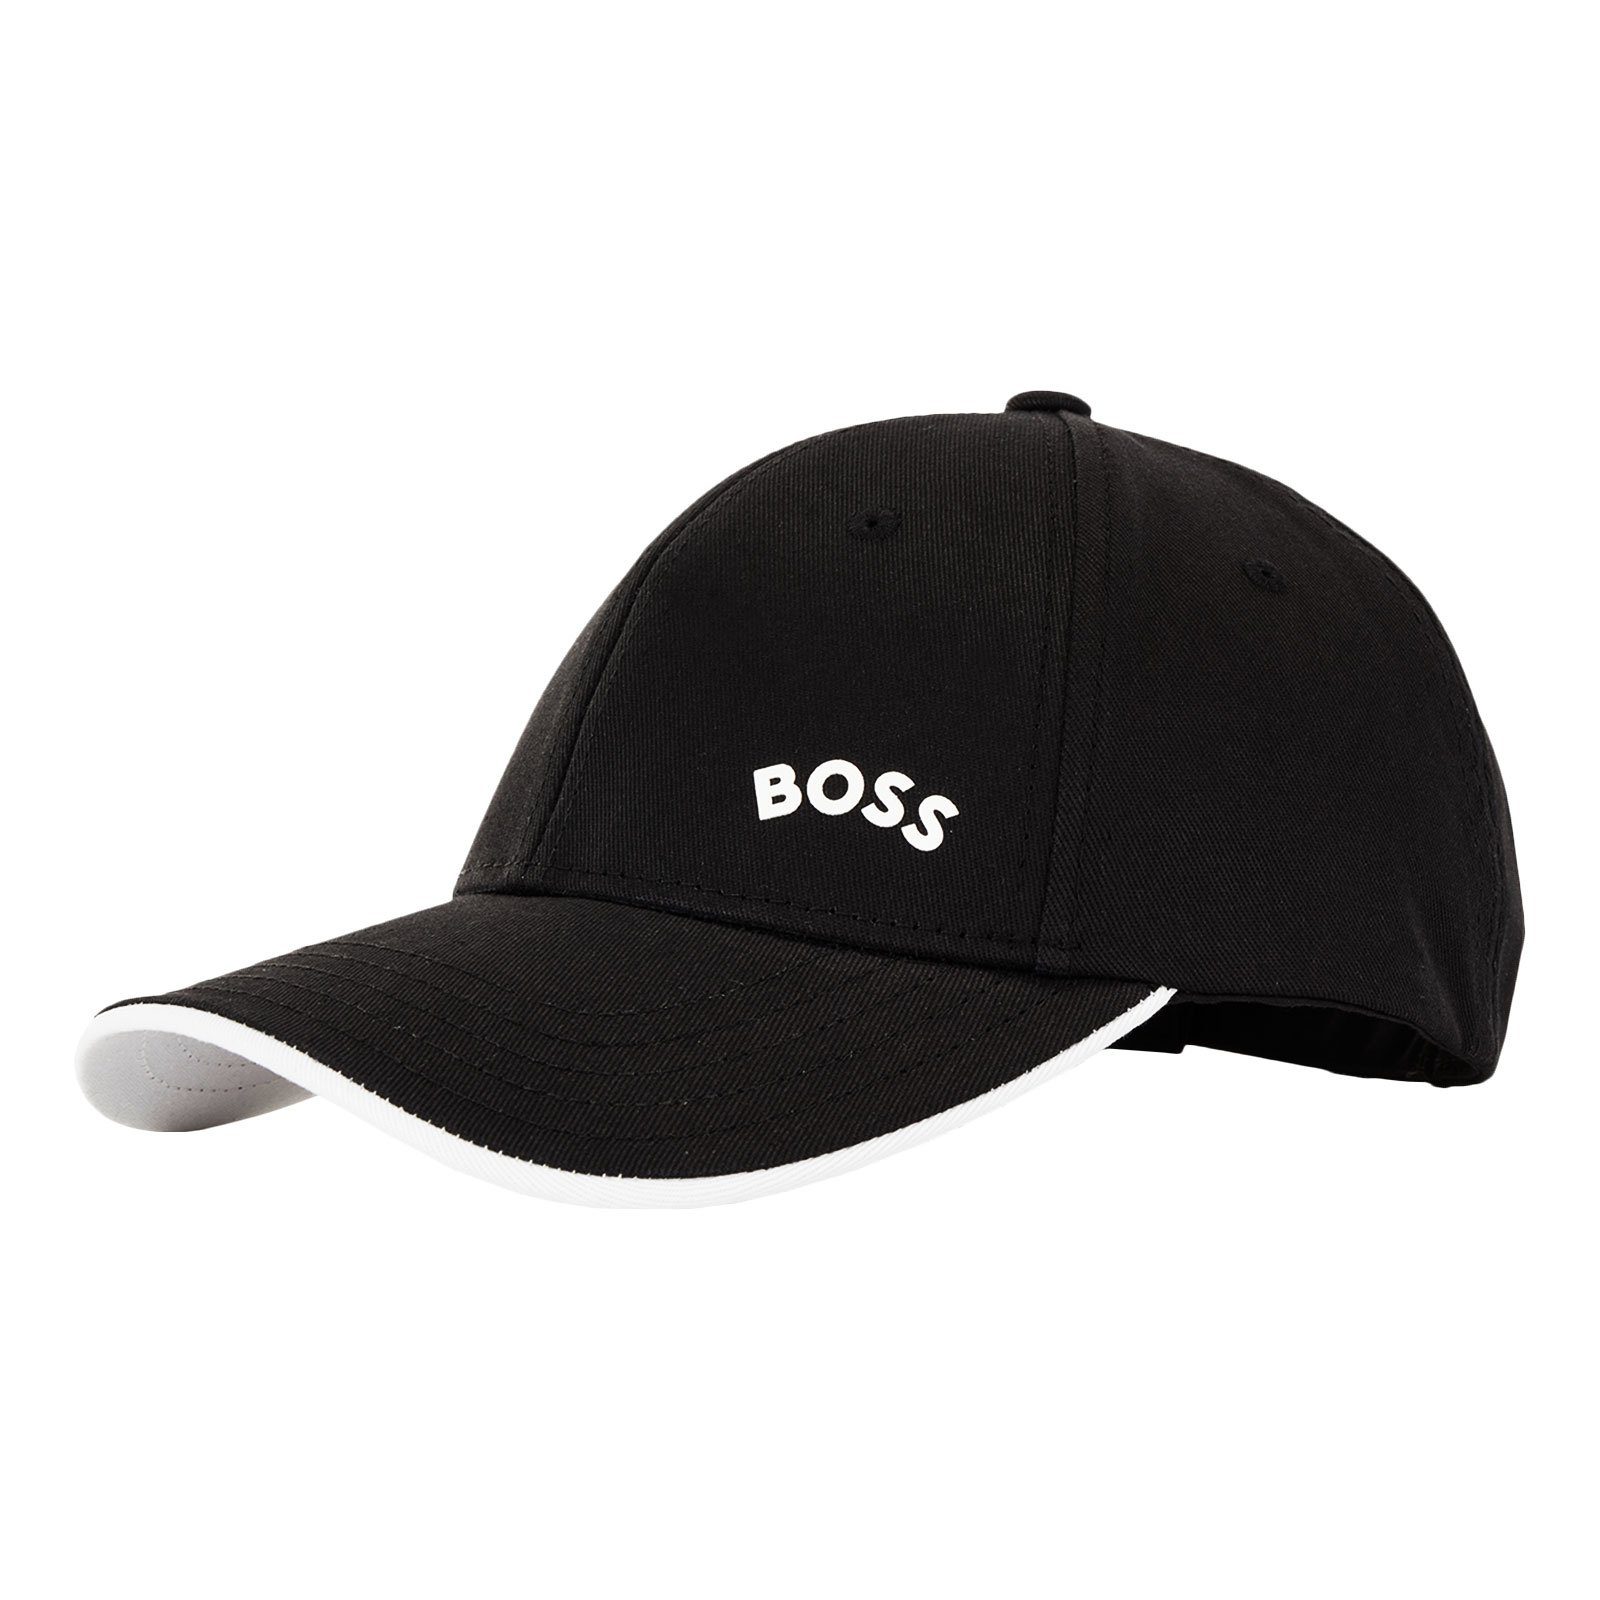 BOSS Baseball Cap Cap-Bold-Curved Schirmunterseite in Kontrastfarbe 001 black / white